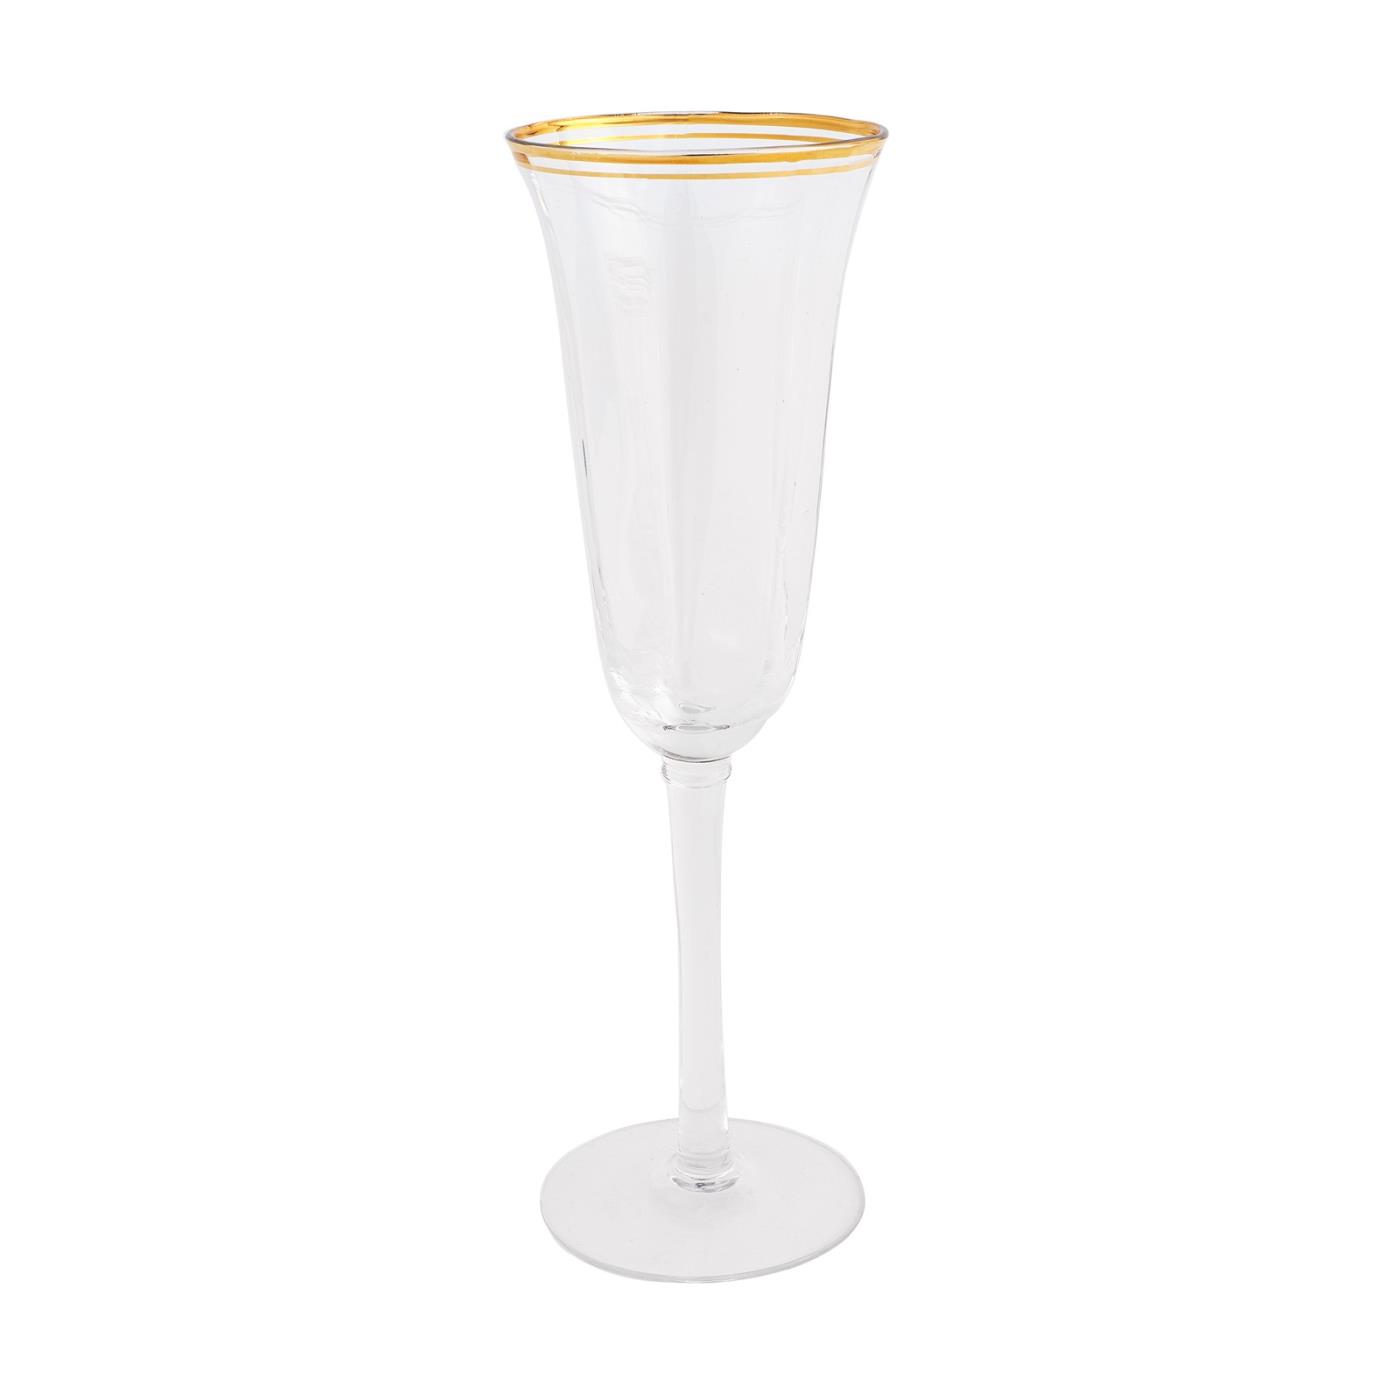 Windsor Gold Collection -  Champagne Flute 5.5 oz